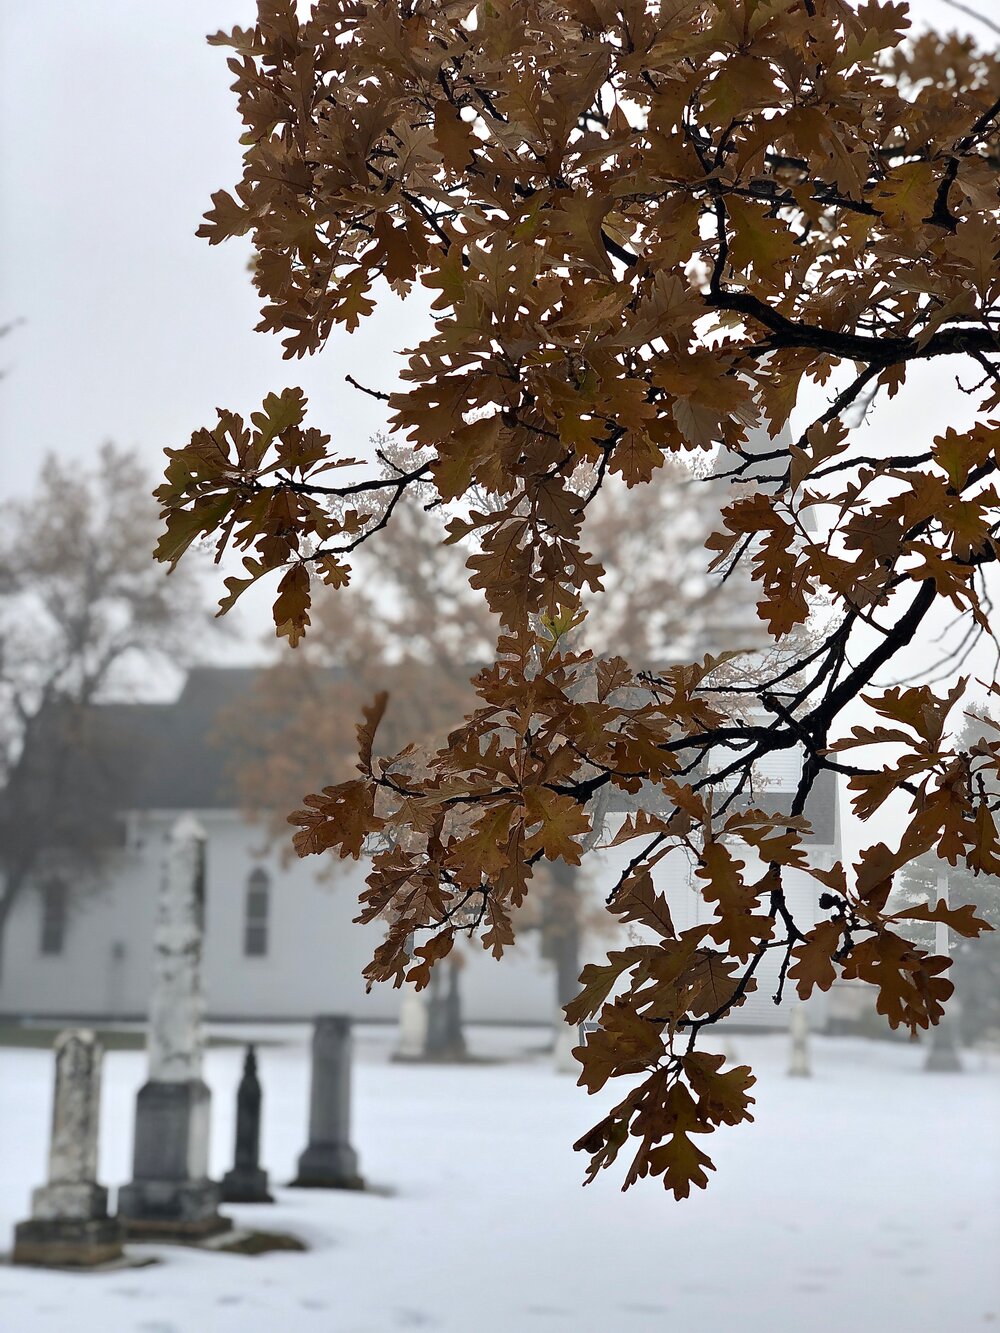 Vikur, the oldest Icelandic church in North America in Mountain, North Dakota.